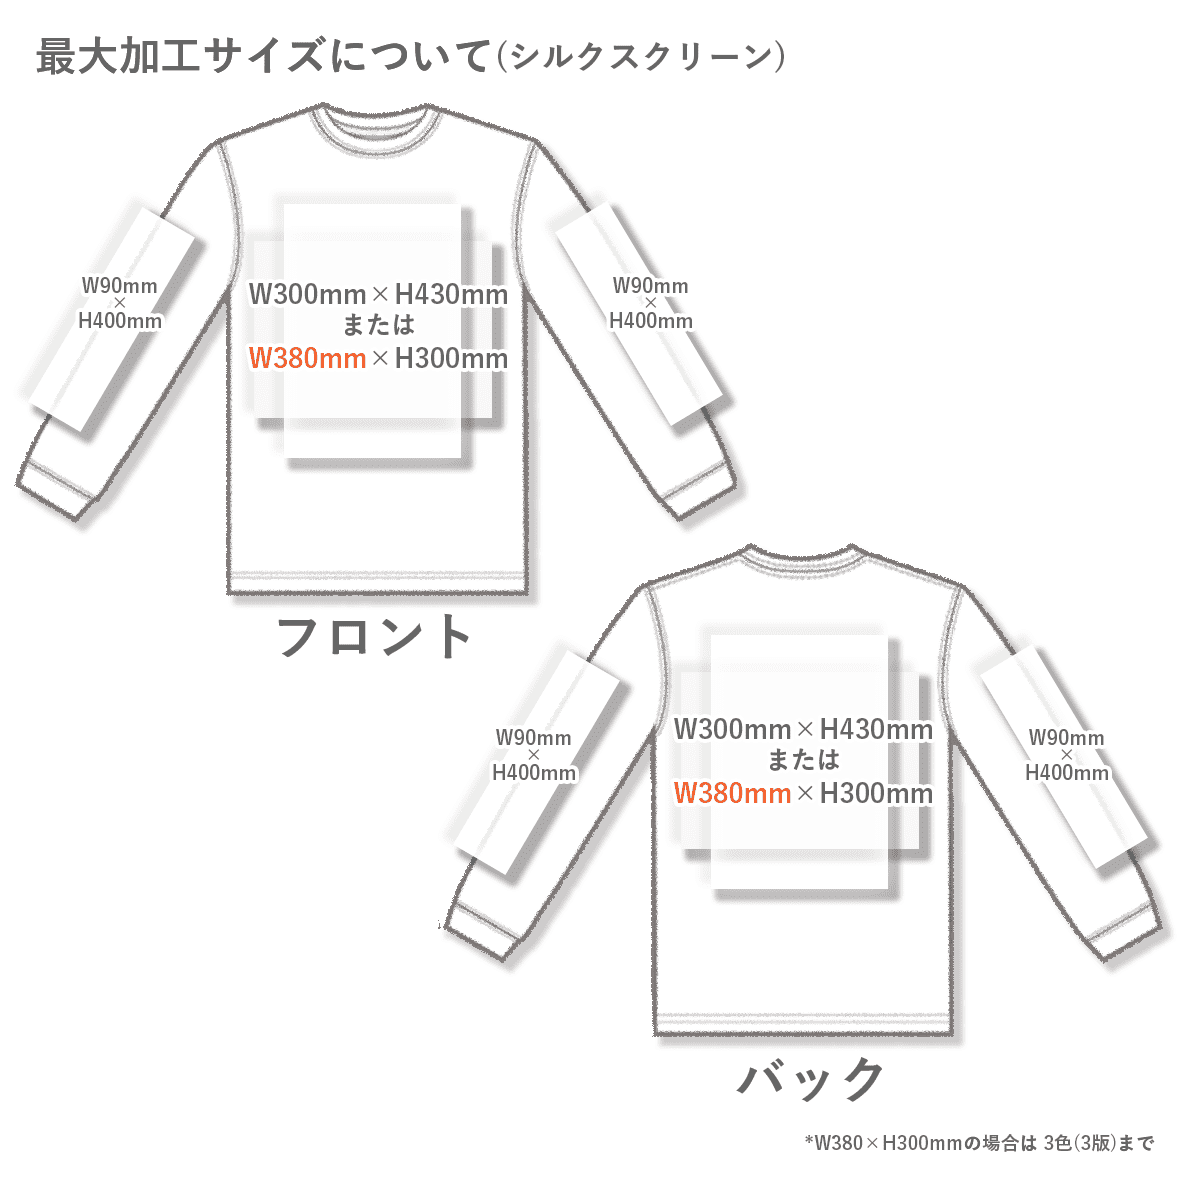 BAYSIDE ベイサイド 6.1 oz USA-Made Long Sleeve Tシャツ (品番6100)